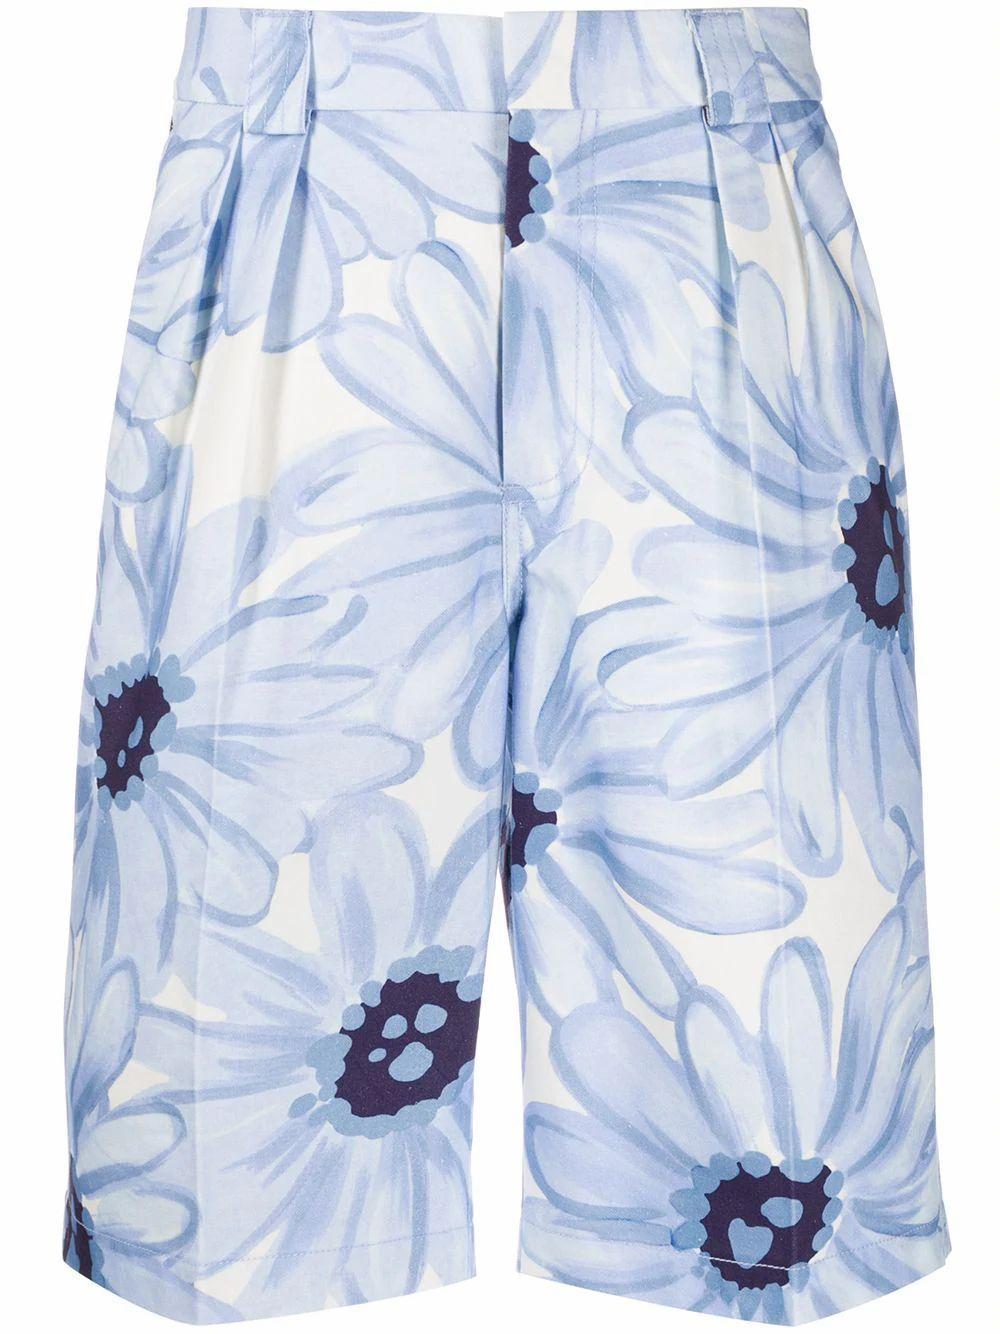 Jacquemus Cotton Shorts in Light Blue (Blue) for Men - Lyst